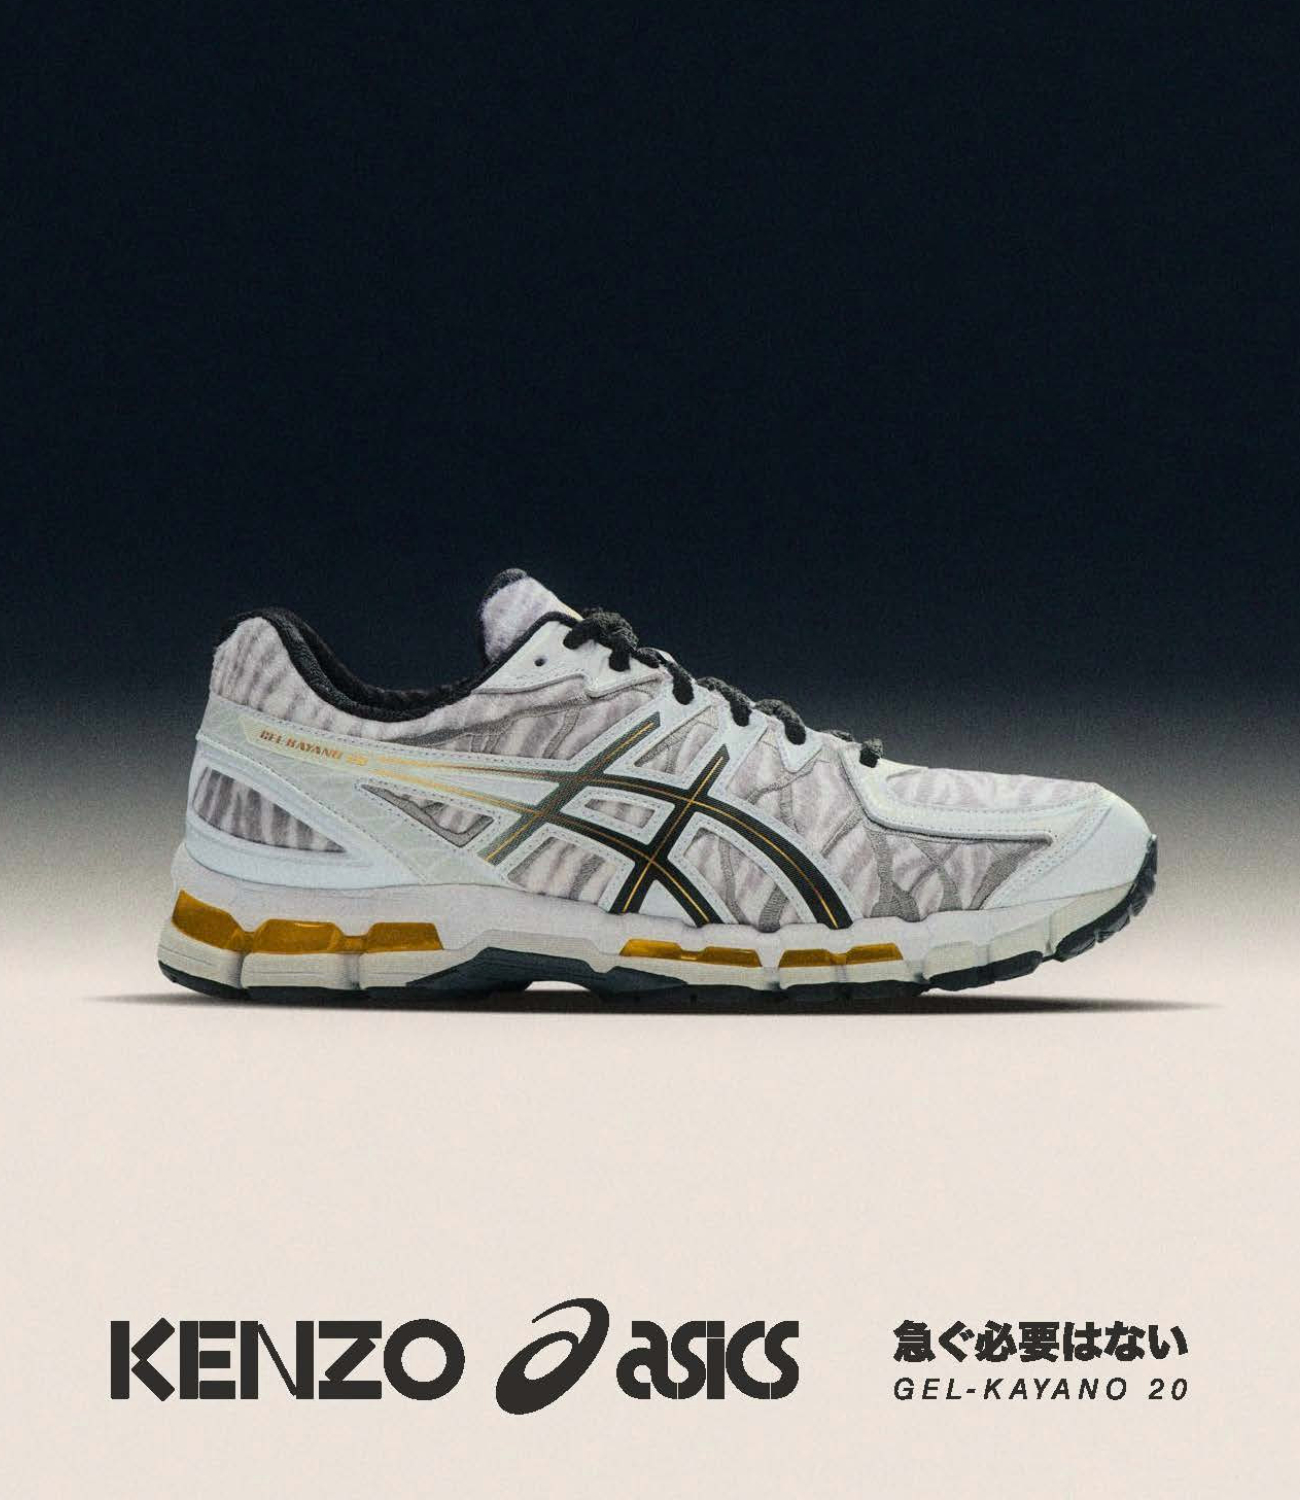 KENZO's ASICS GEL-Kayano 20 Sneaker Is a Wild Throwback